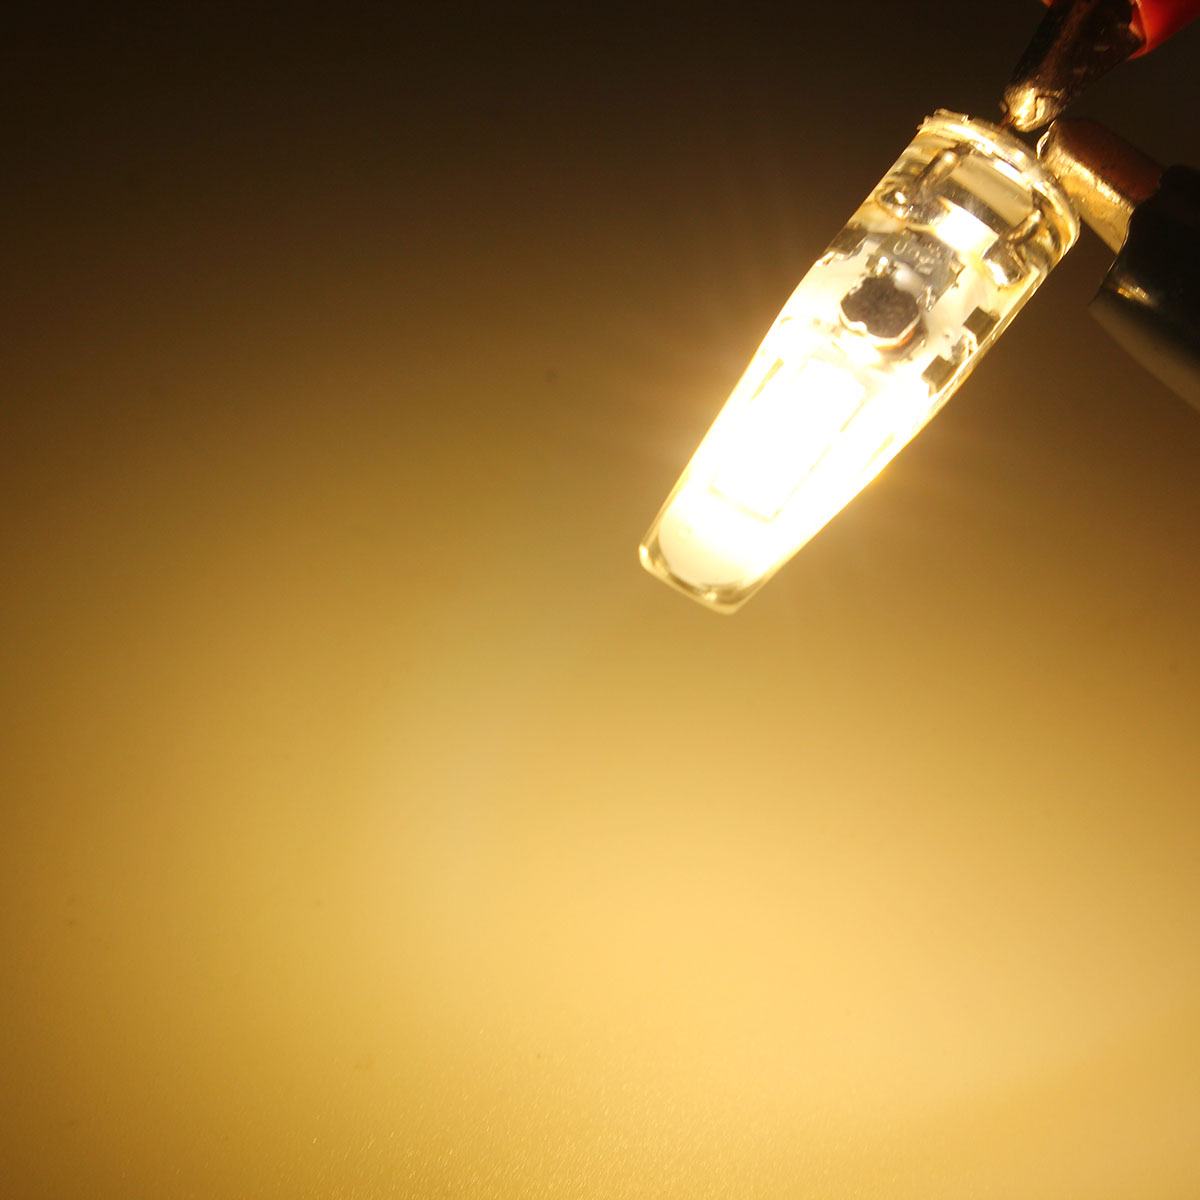 Mini-G4-LED-Corn-Bulb-2W-6-SMD-2835-Silicone-Crystal-Lamp-Light-DC12V-1065960-3